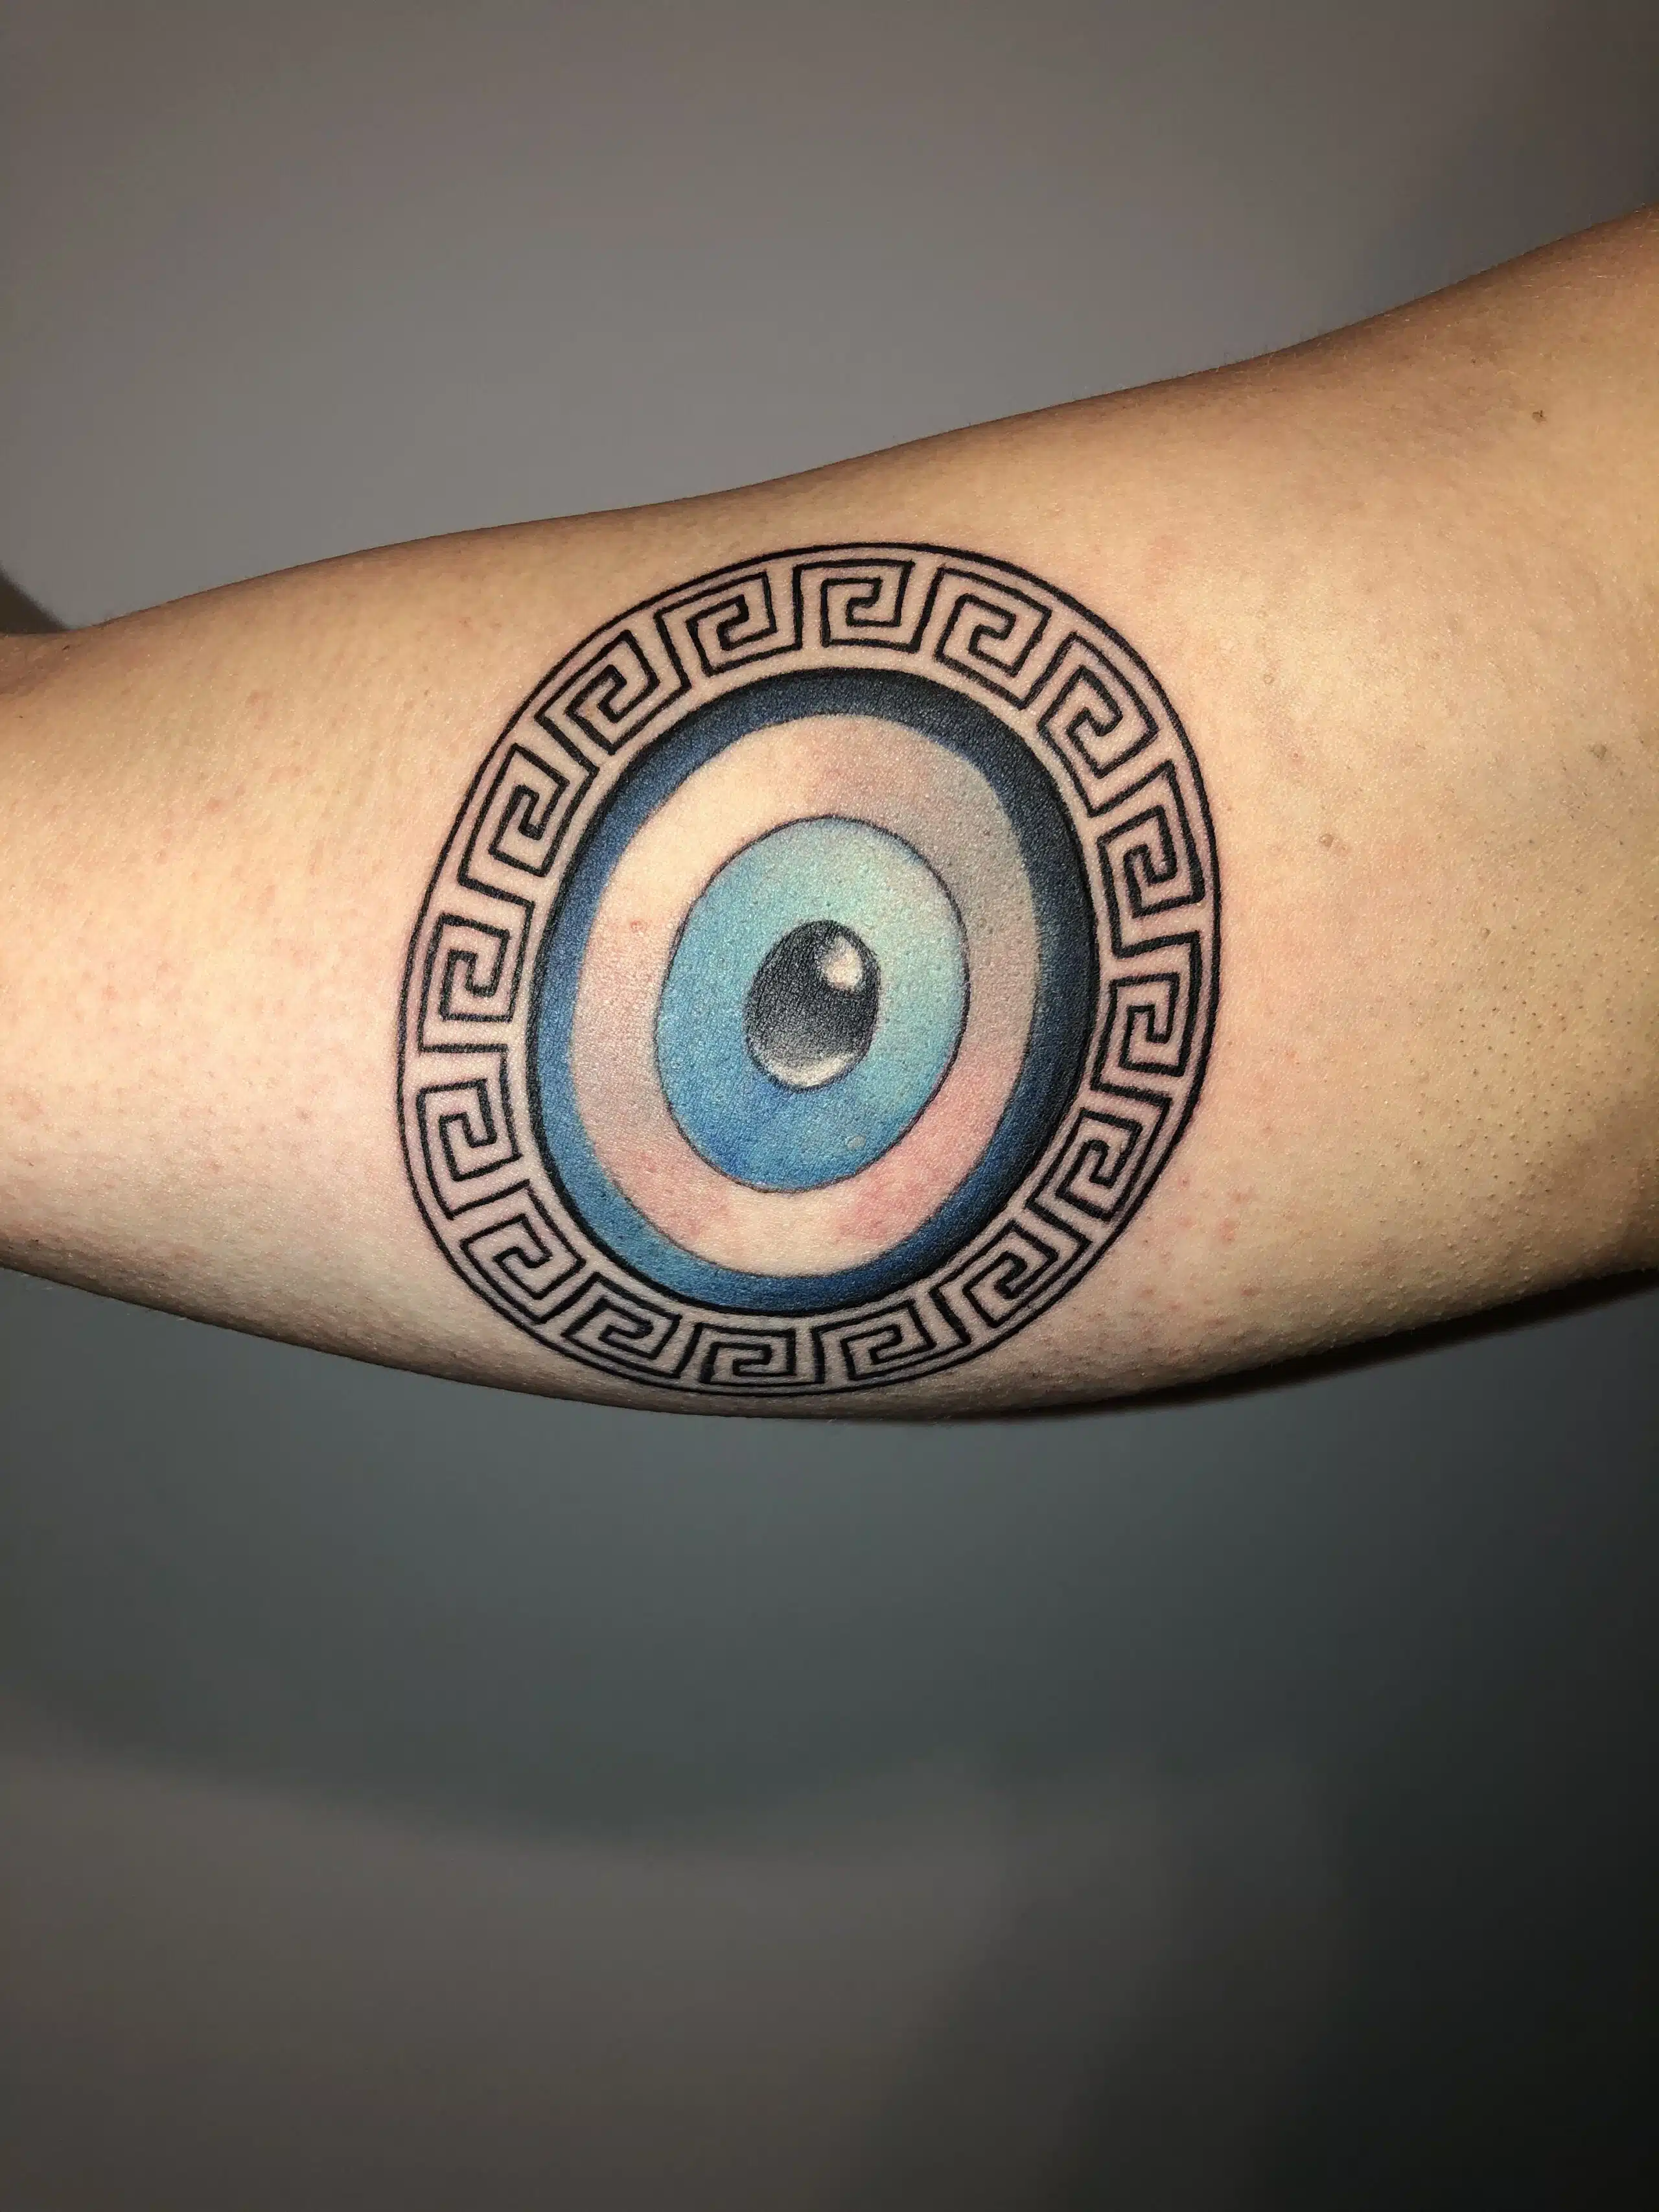 Greek evil eye tattoo